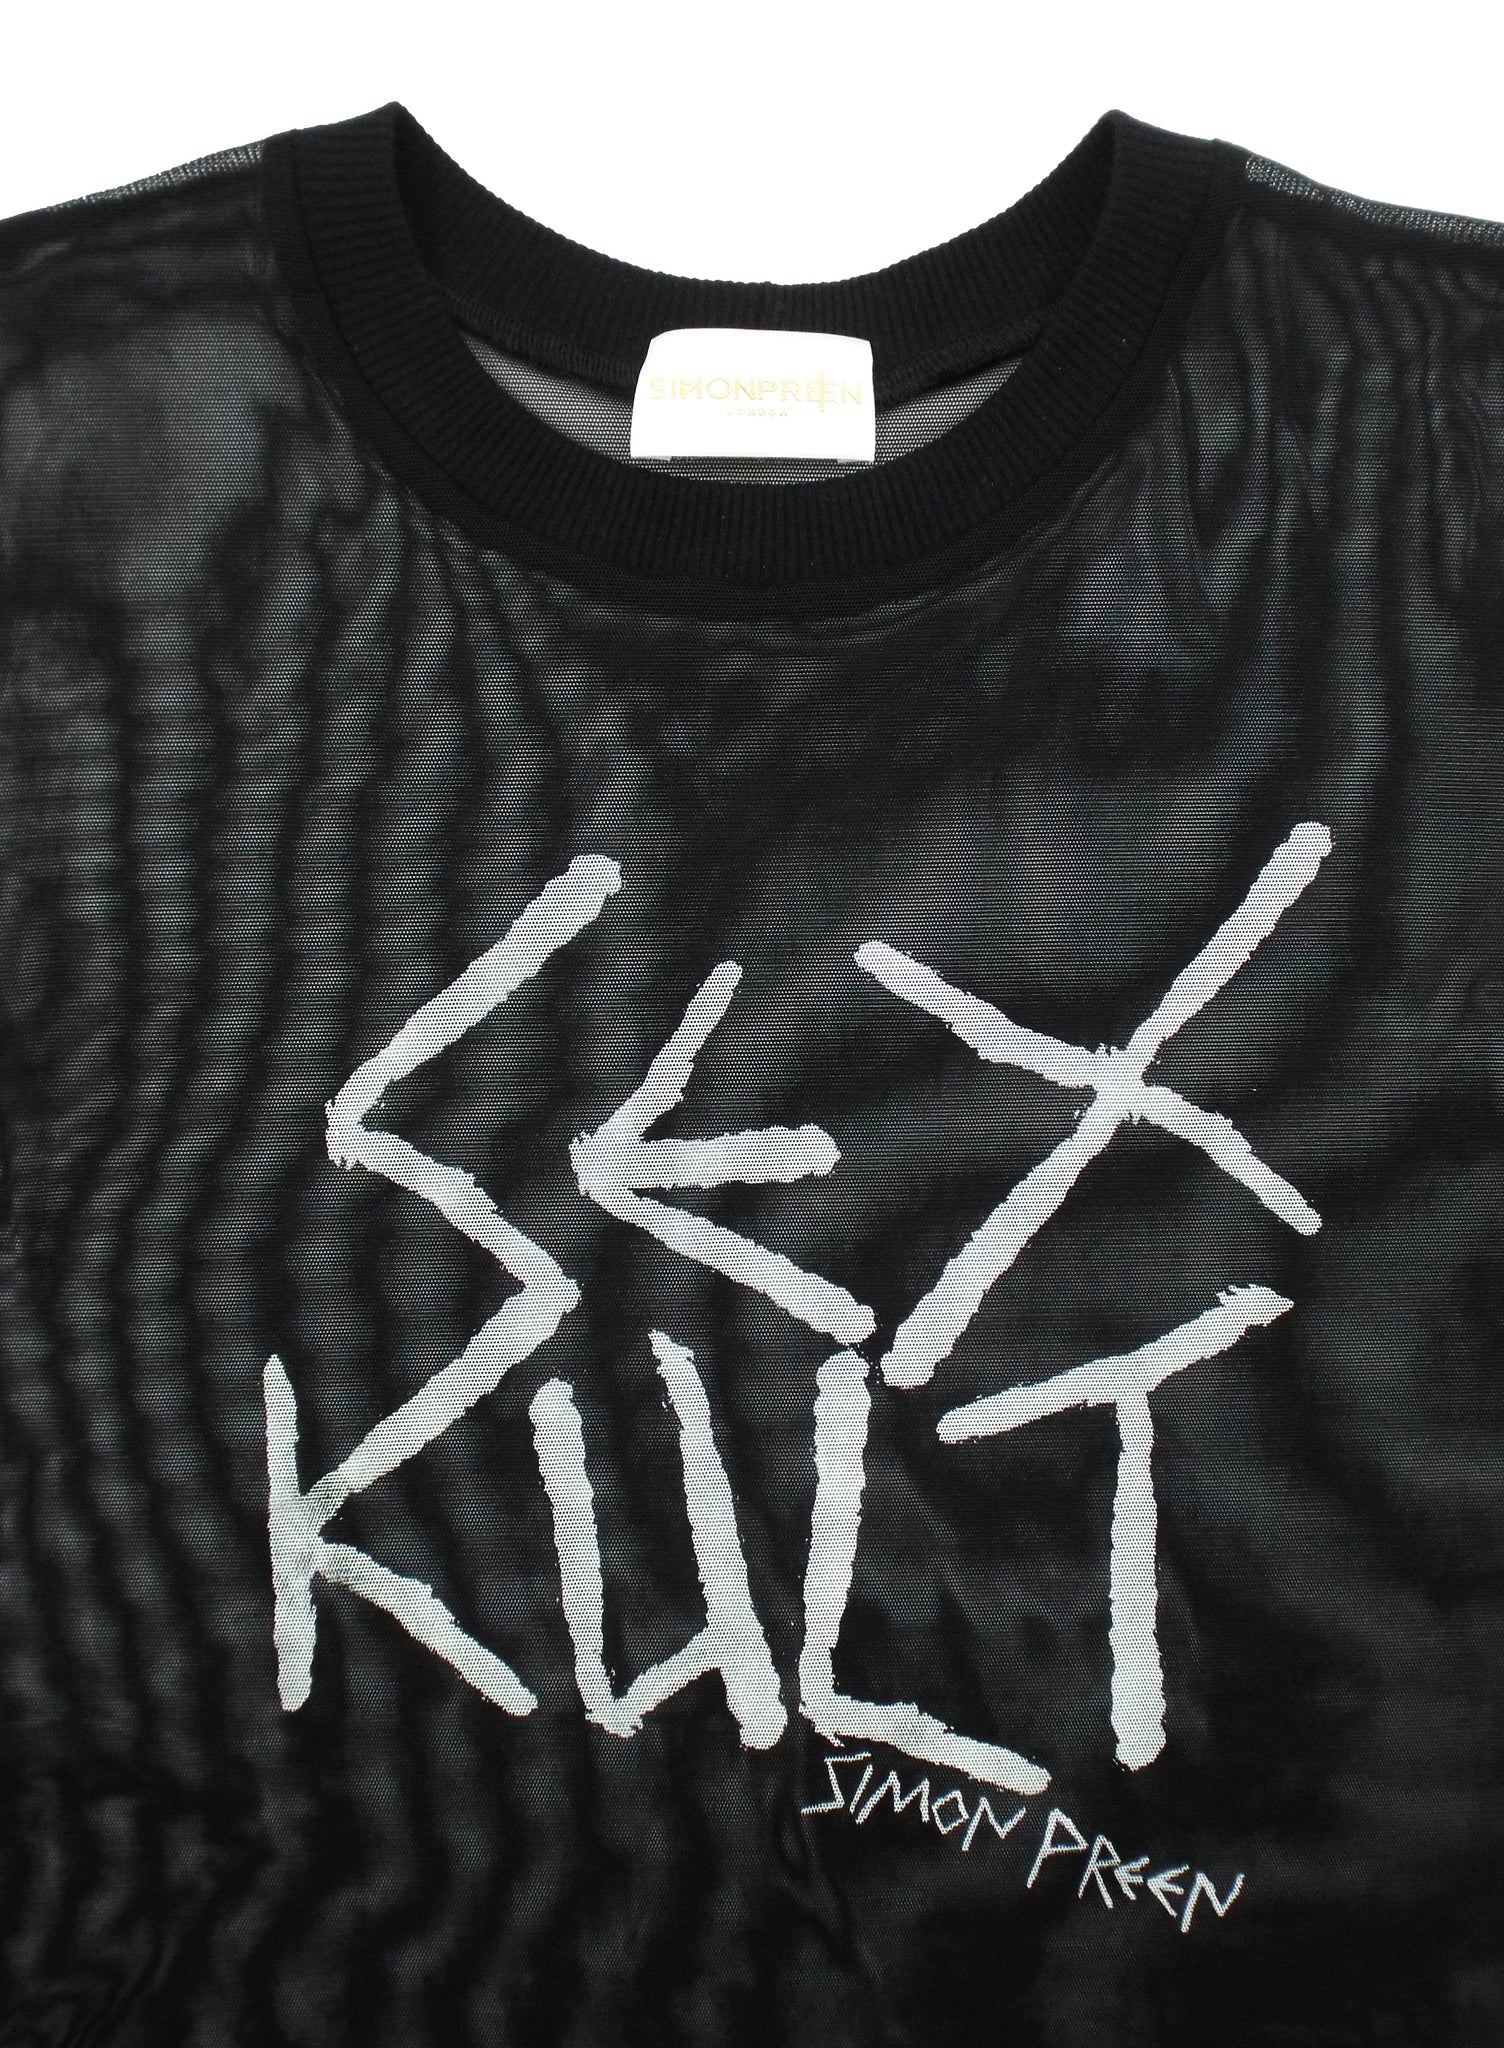 ‘SEX KULT’ T-Shirt Black